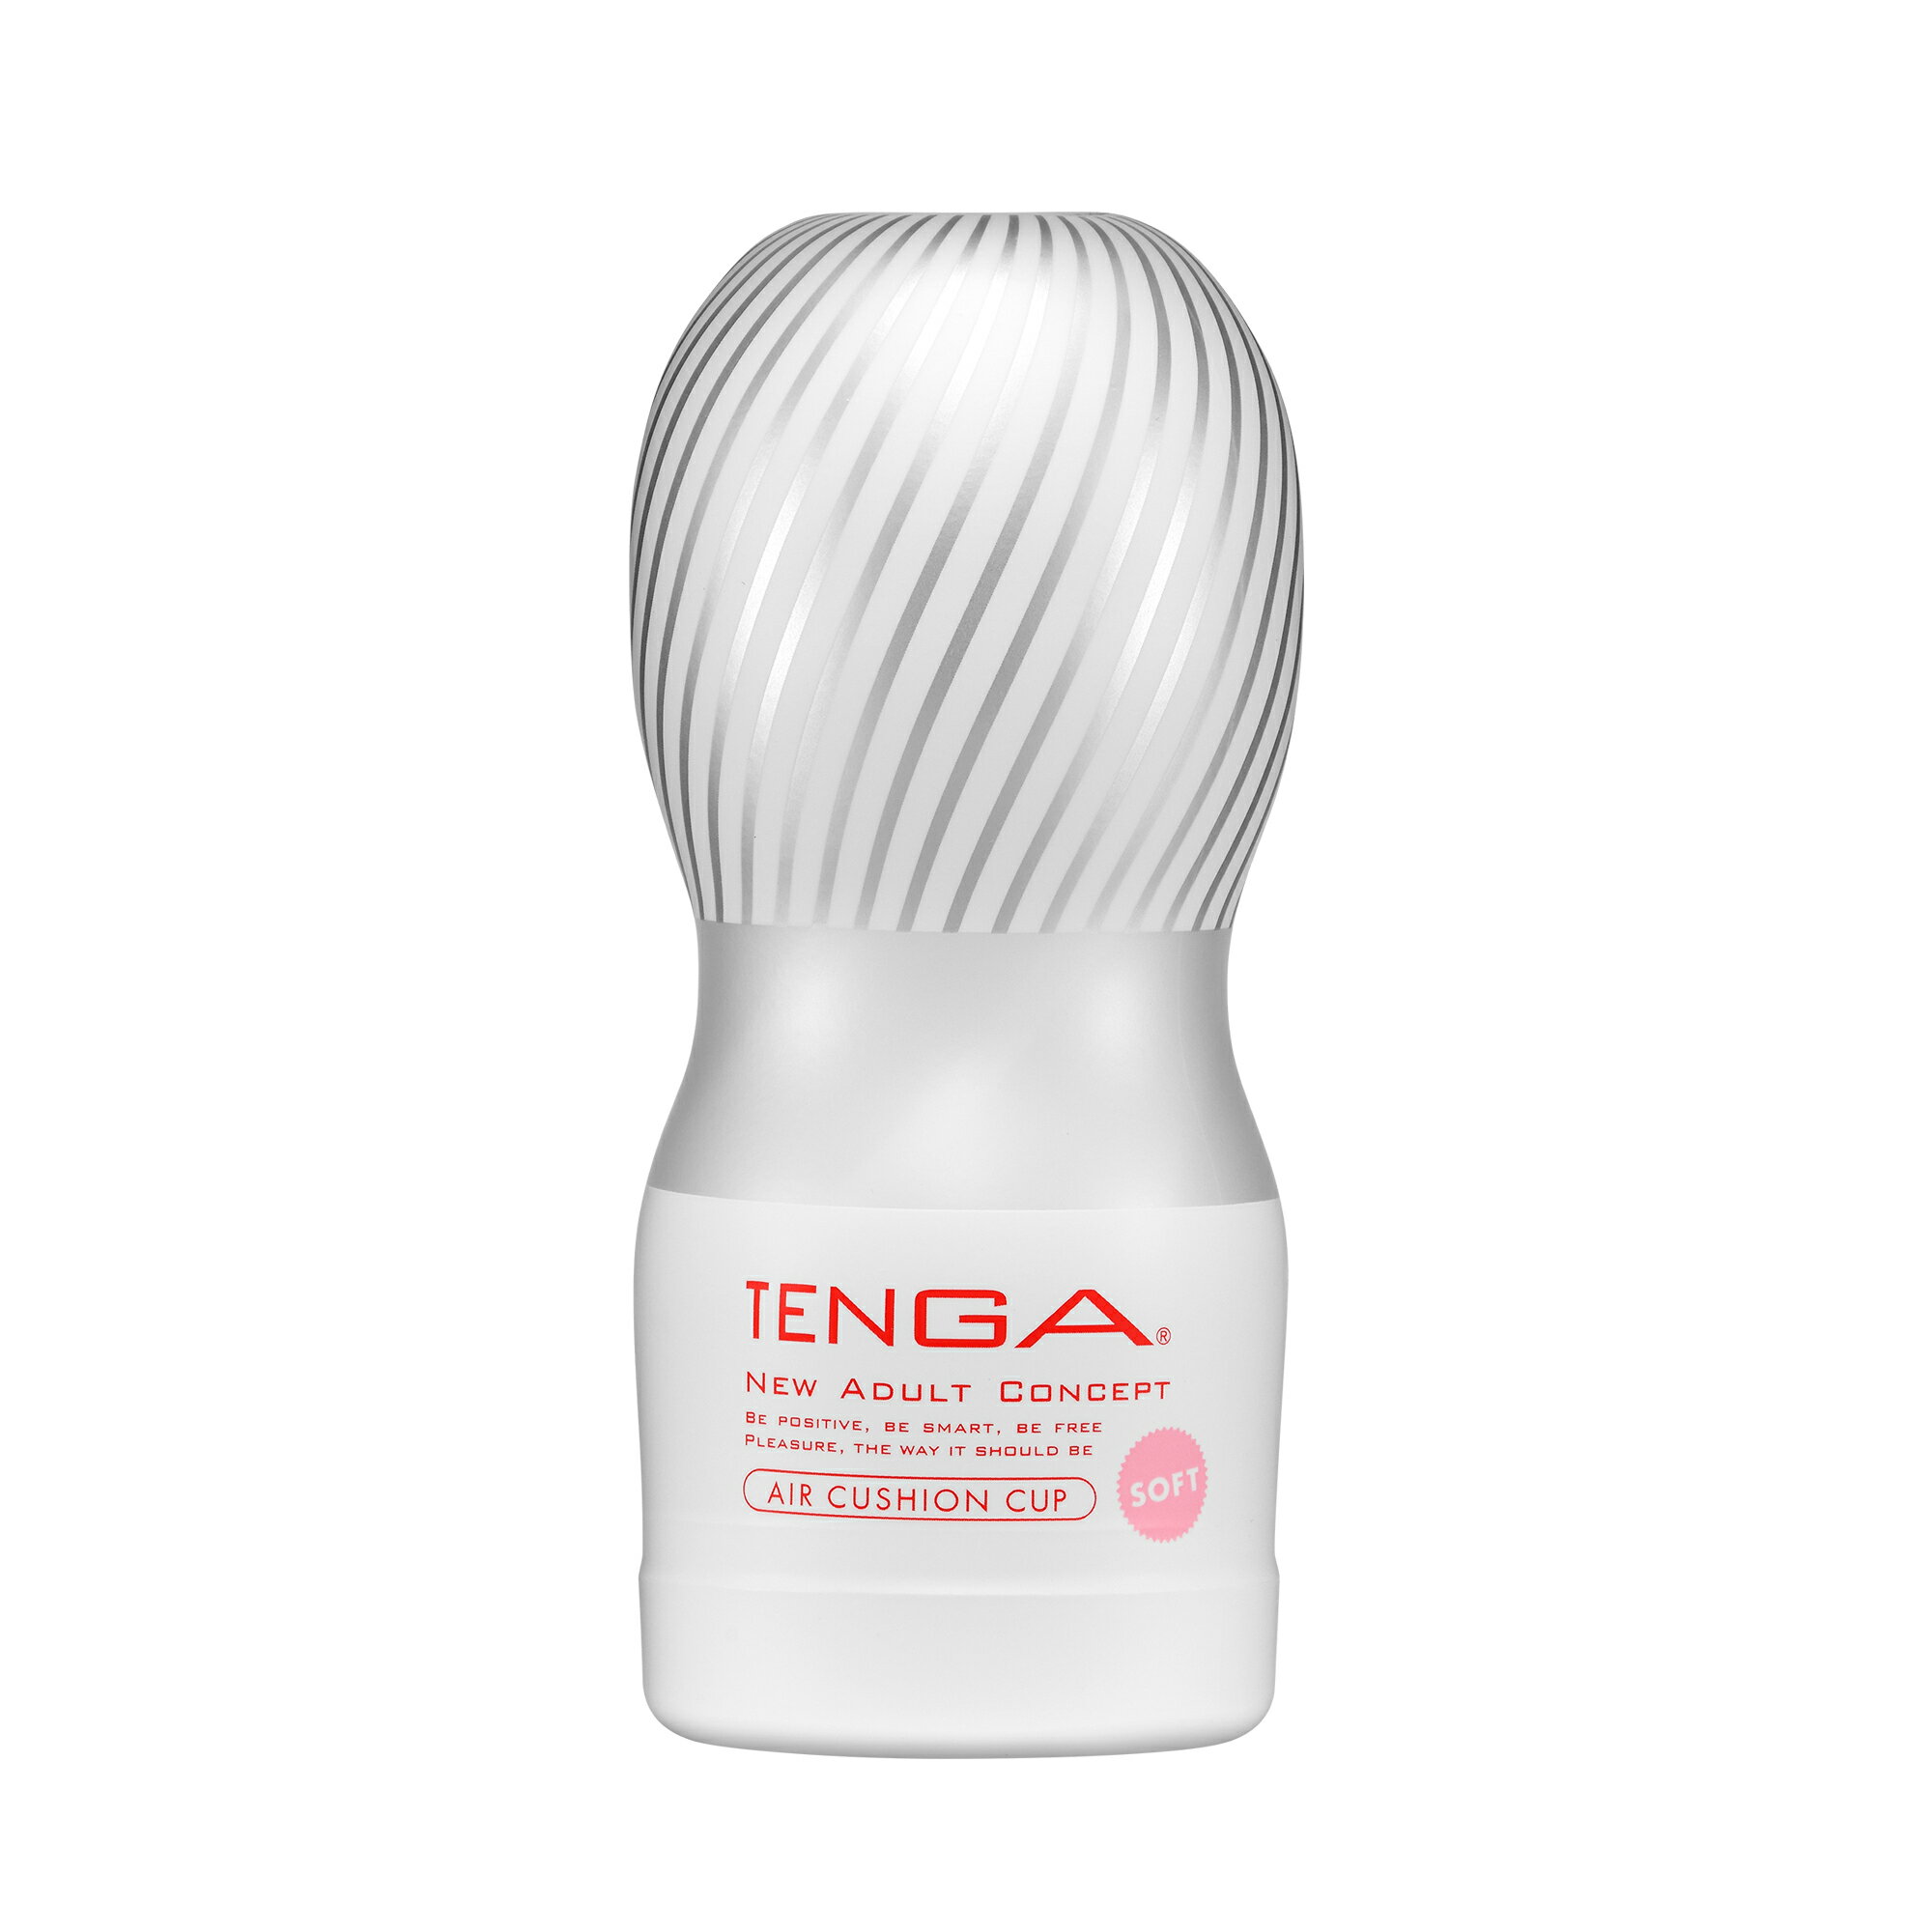 TENGA。TENGA CUP 氣墊杯 [柔嫩版] 飛機杯 情趣用品 【OGC株式會社】【本商品含有兒少不宜內容】